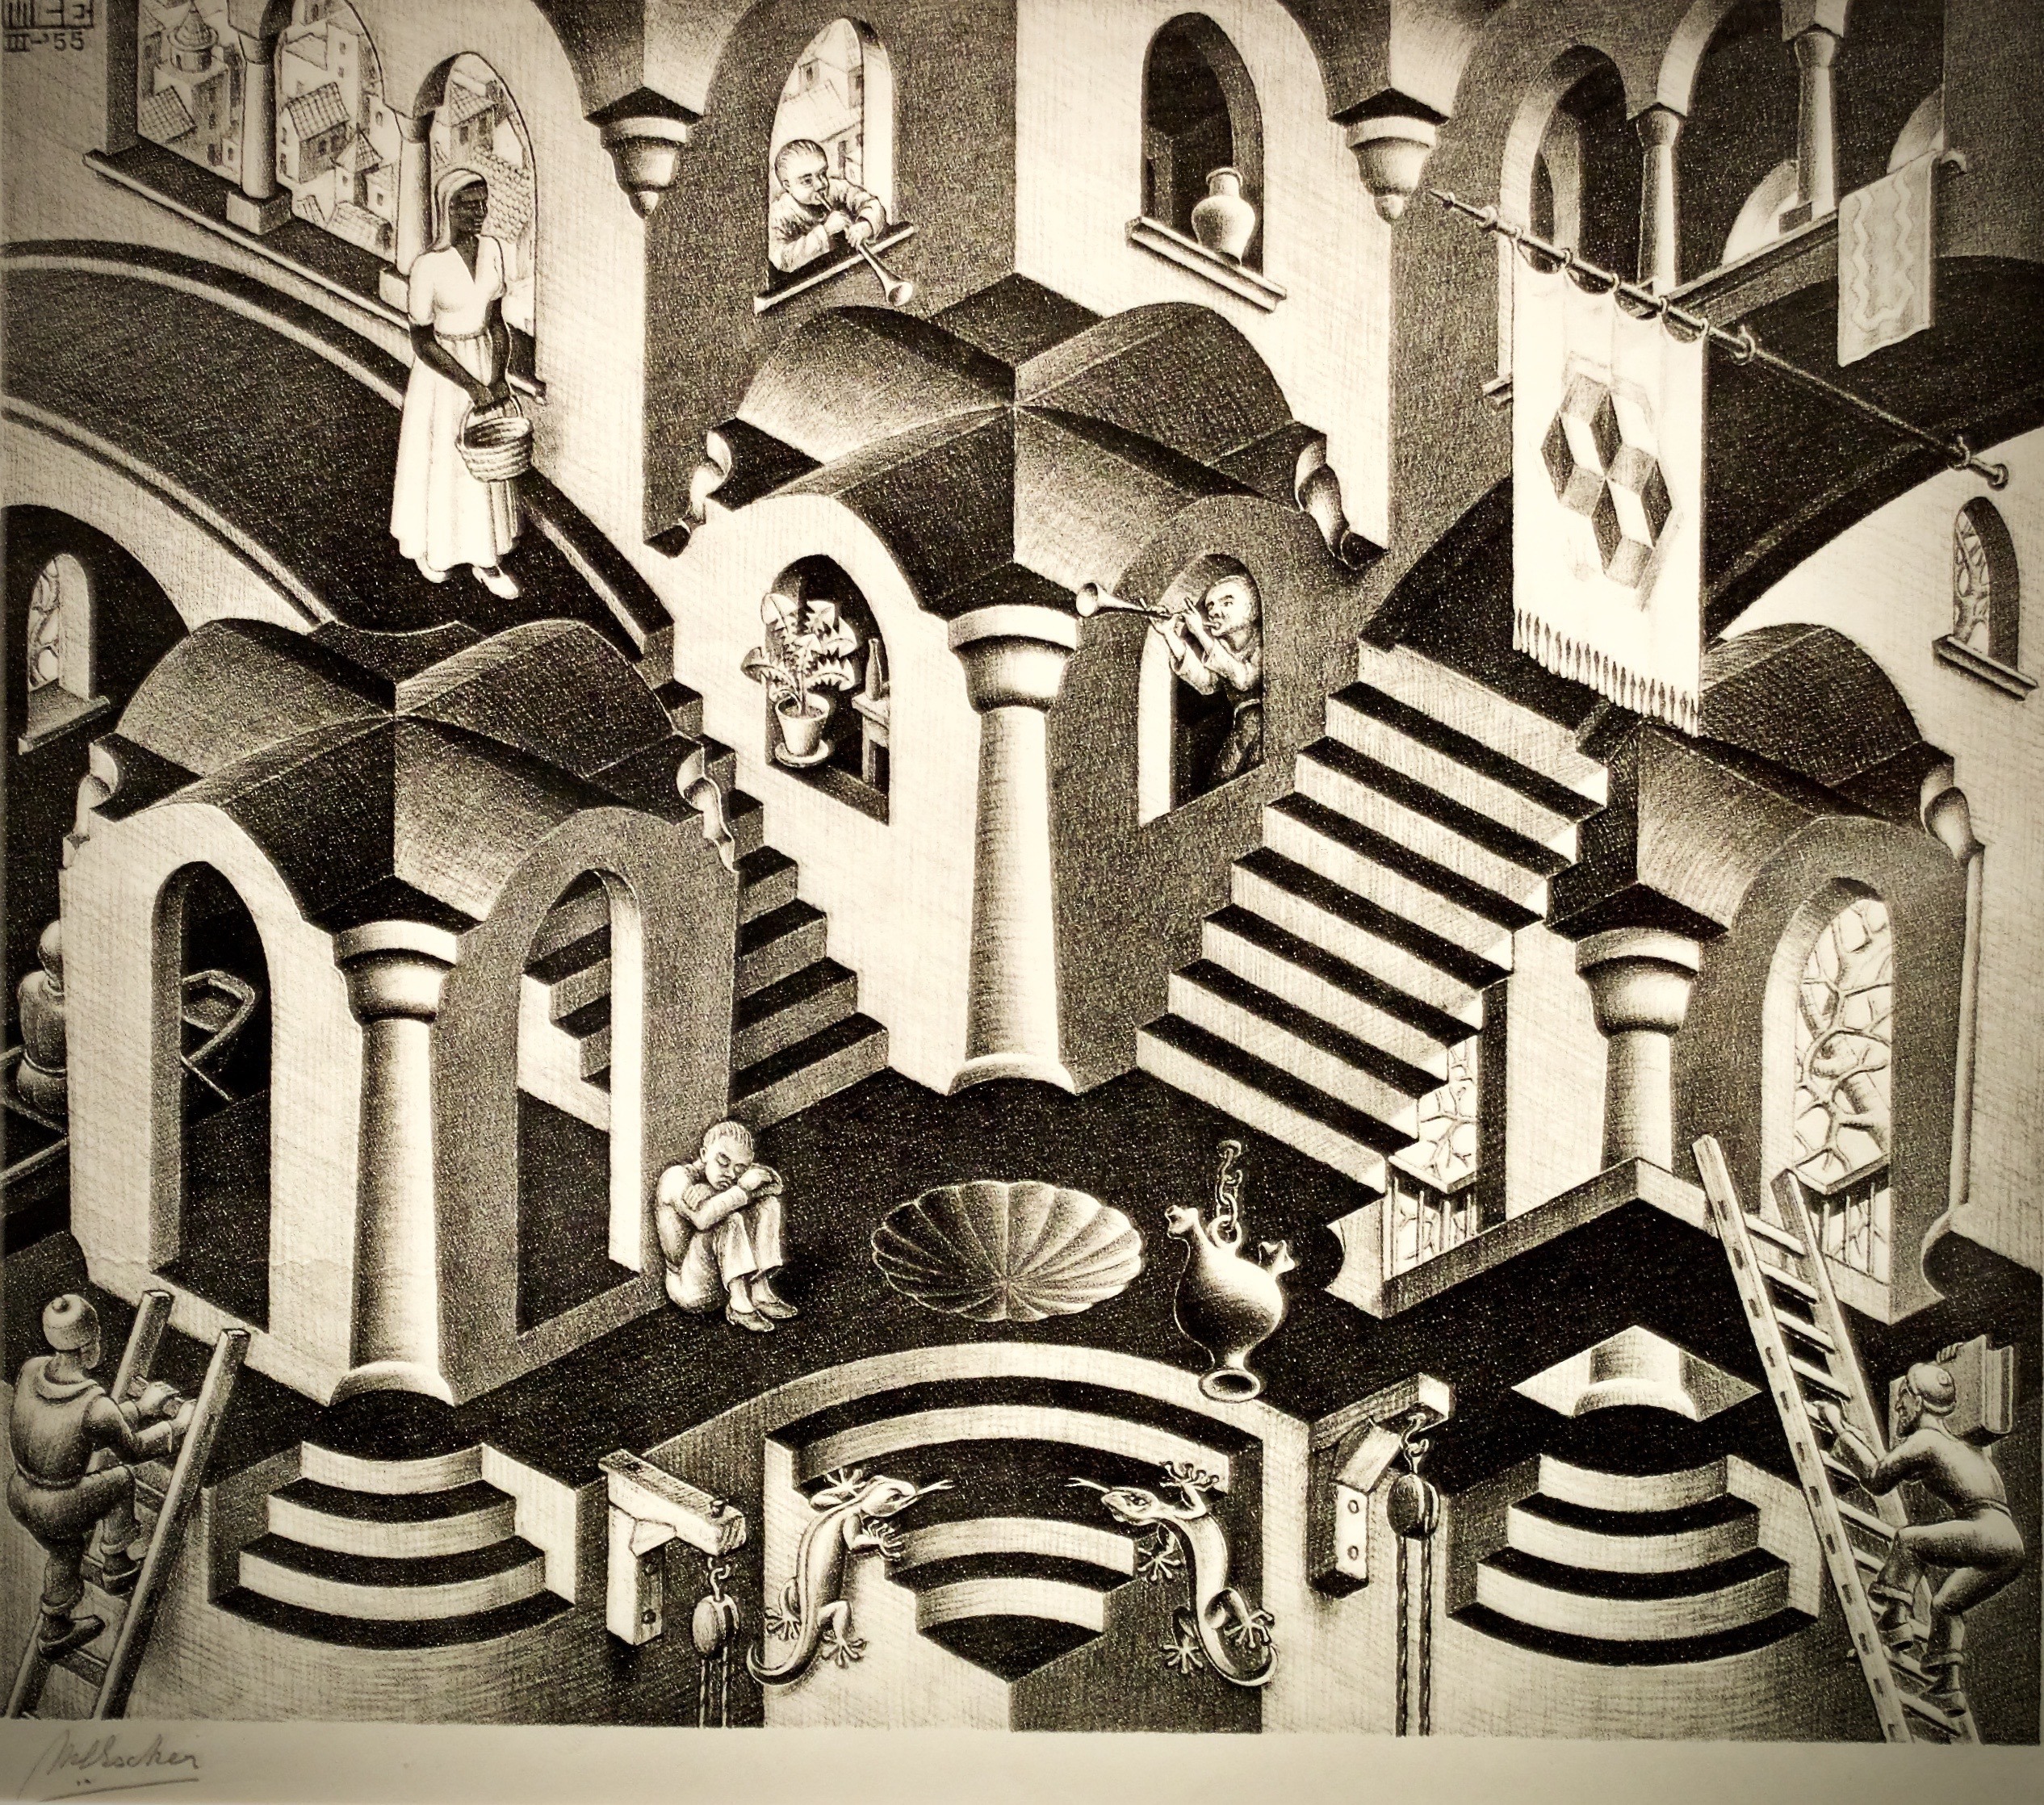 Convex and Concave (1955) by Maurits Cornelis Escher, [Credit: Museu de Arte Popular, Lisbon, Portugal]